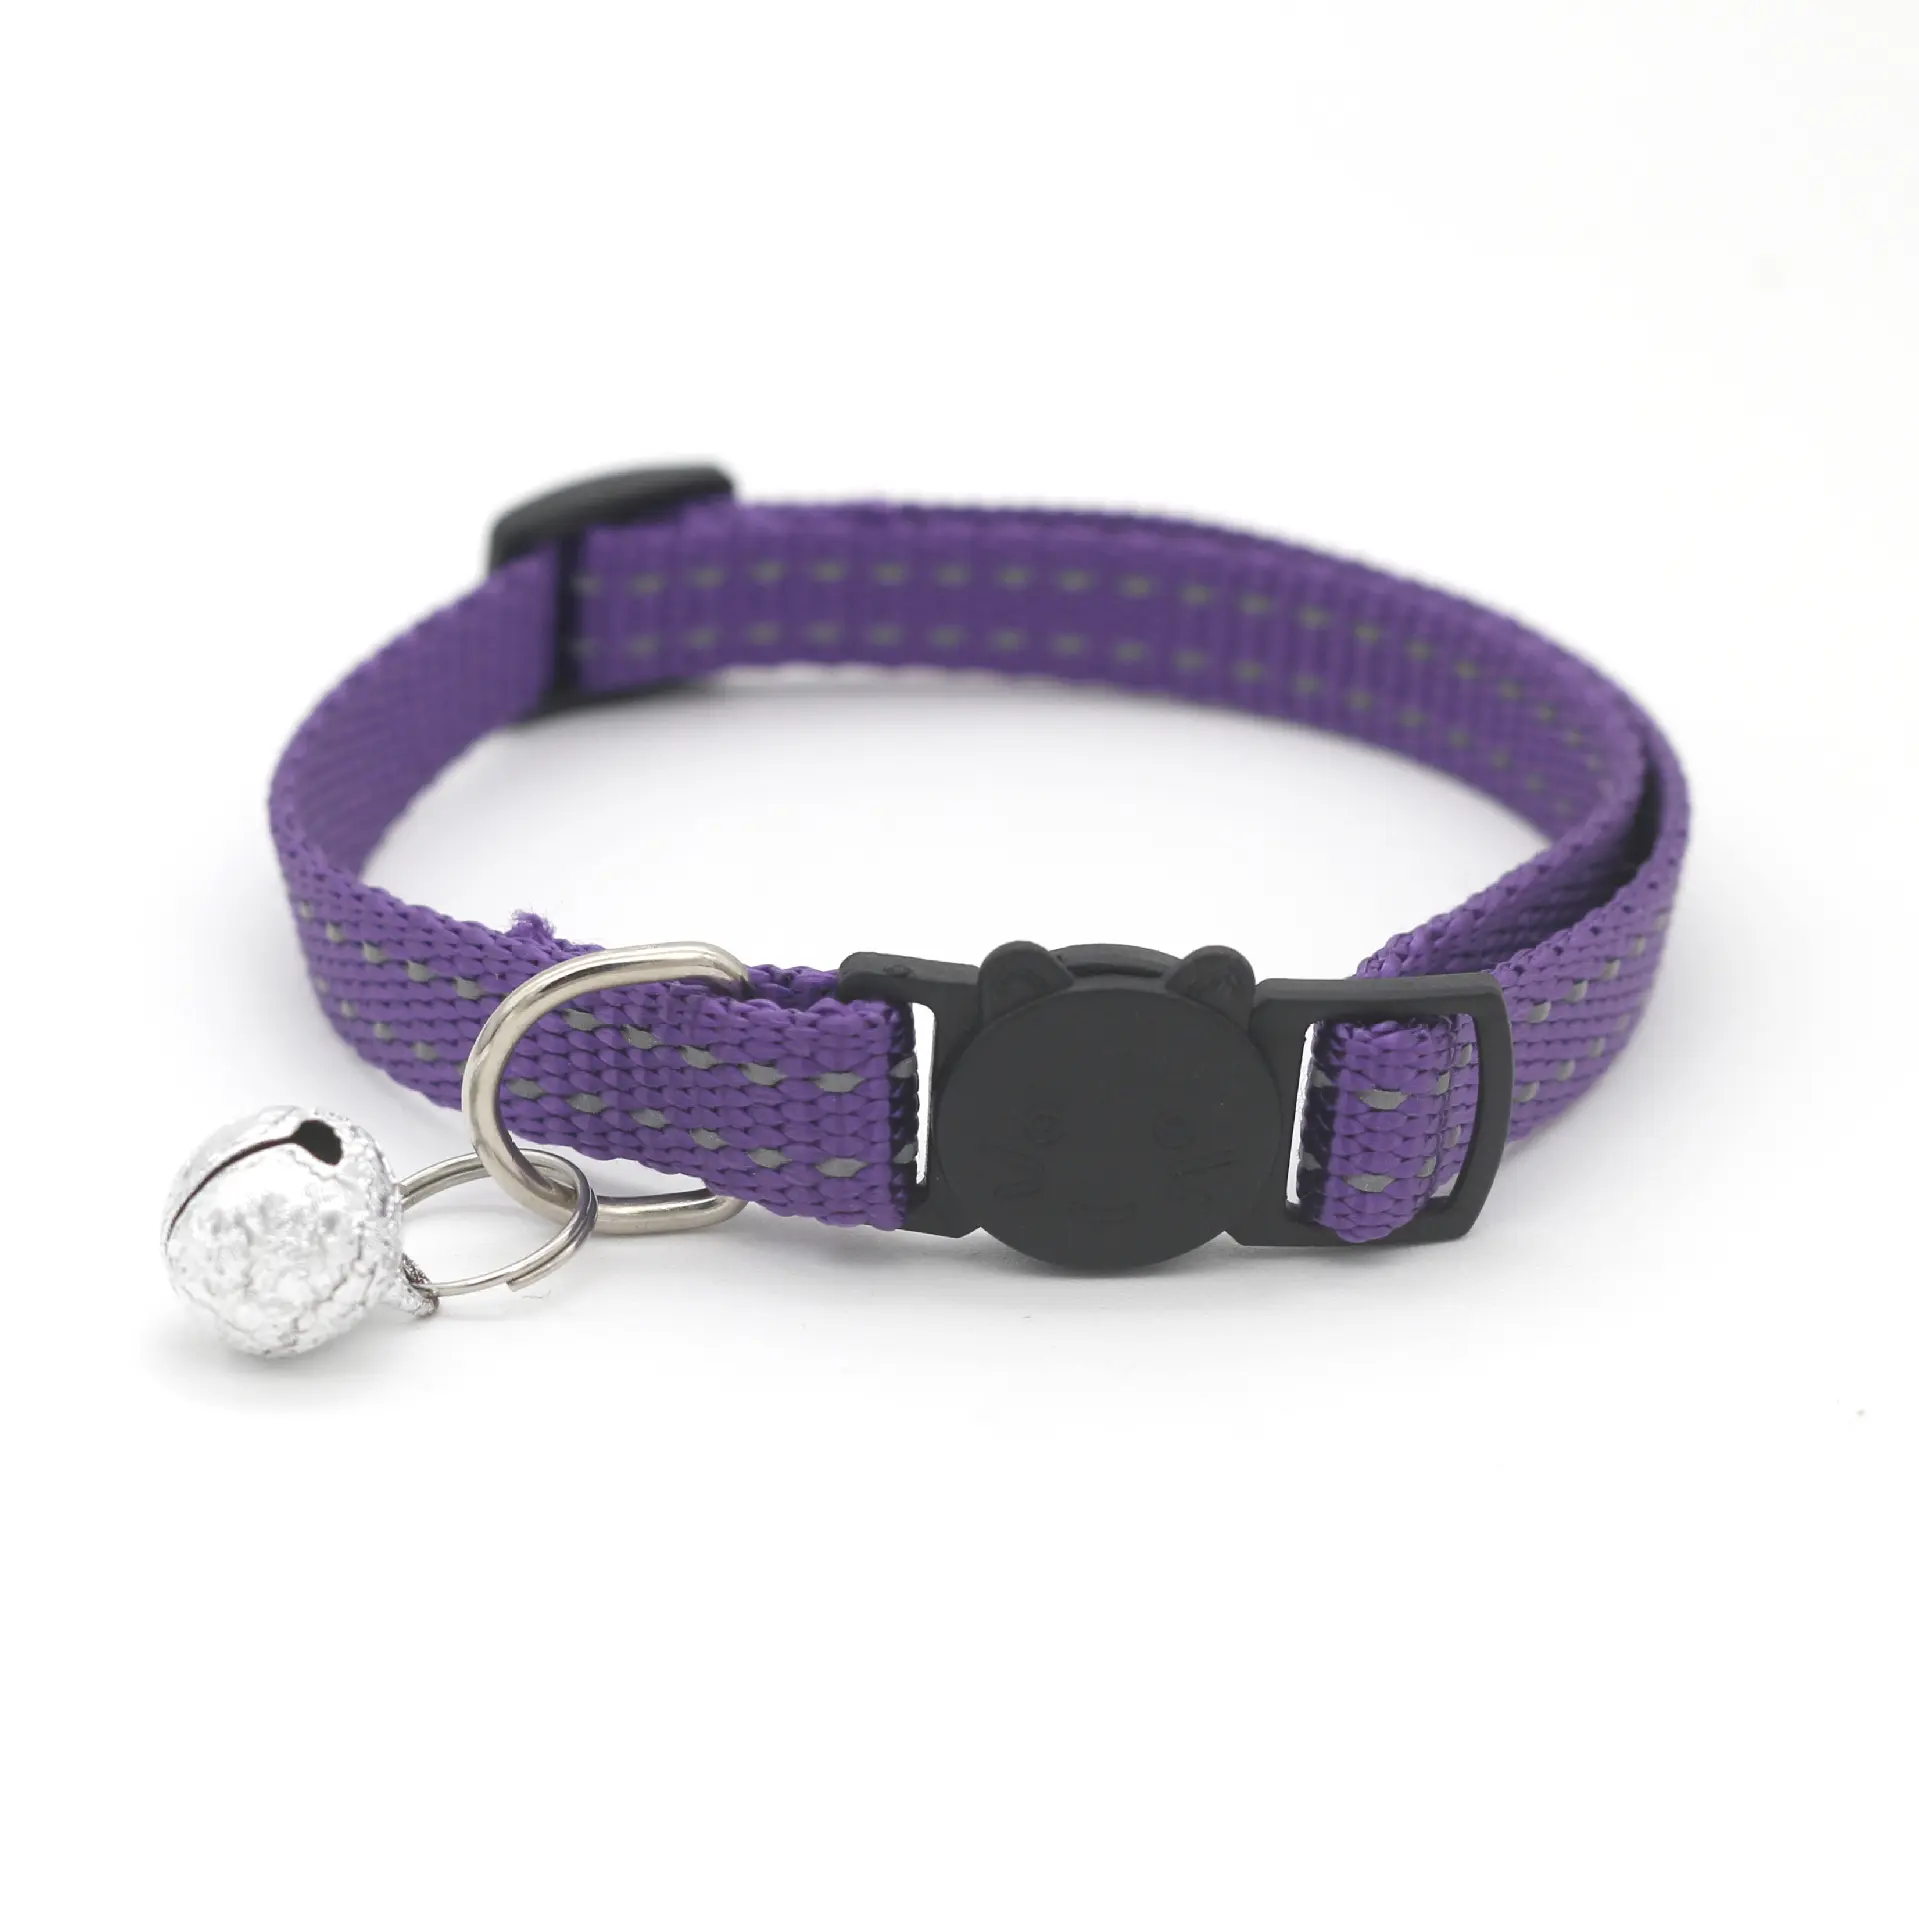 Custom Dog Collar in bulk Nylon Pet Dog Adjustable belt Engraved dog collars with bell